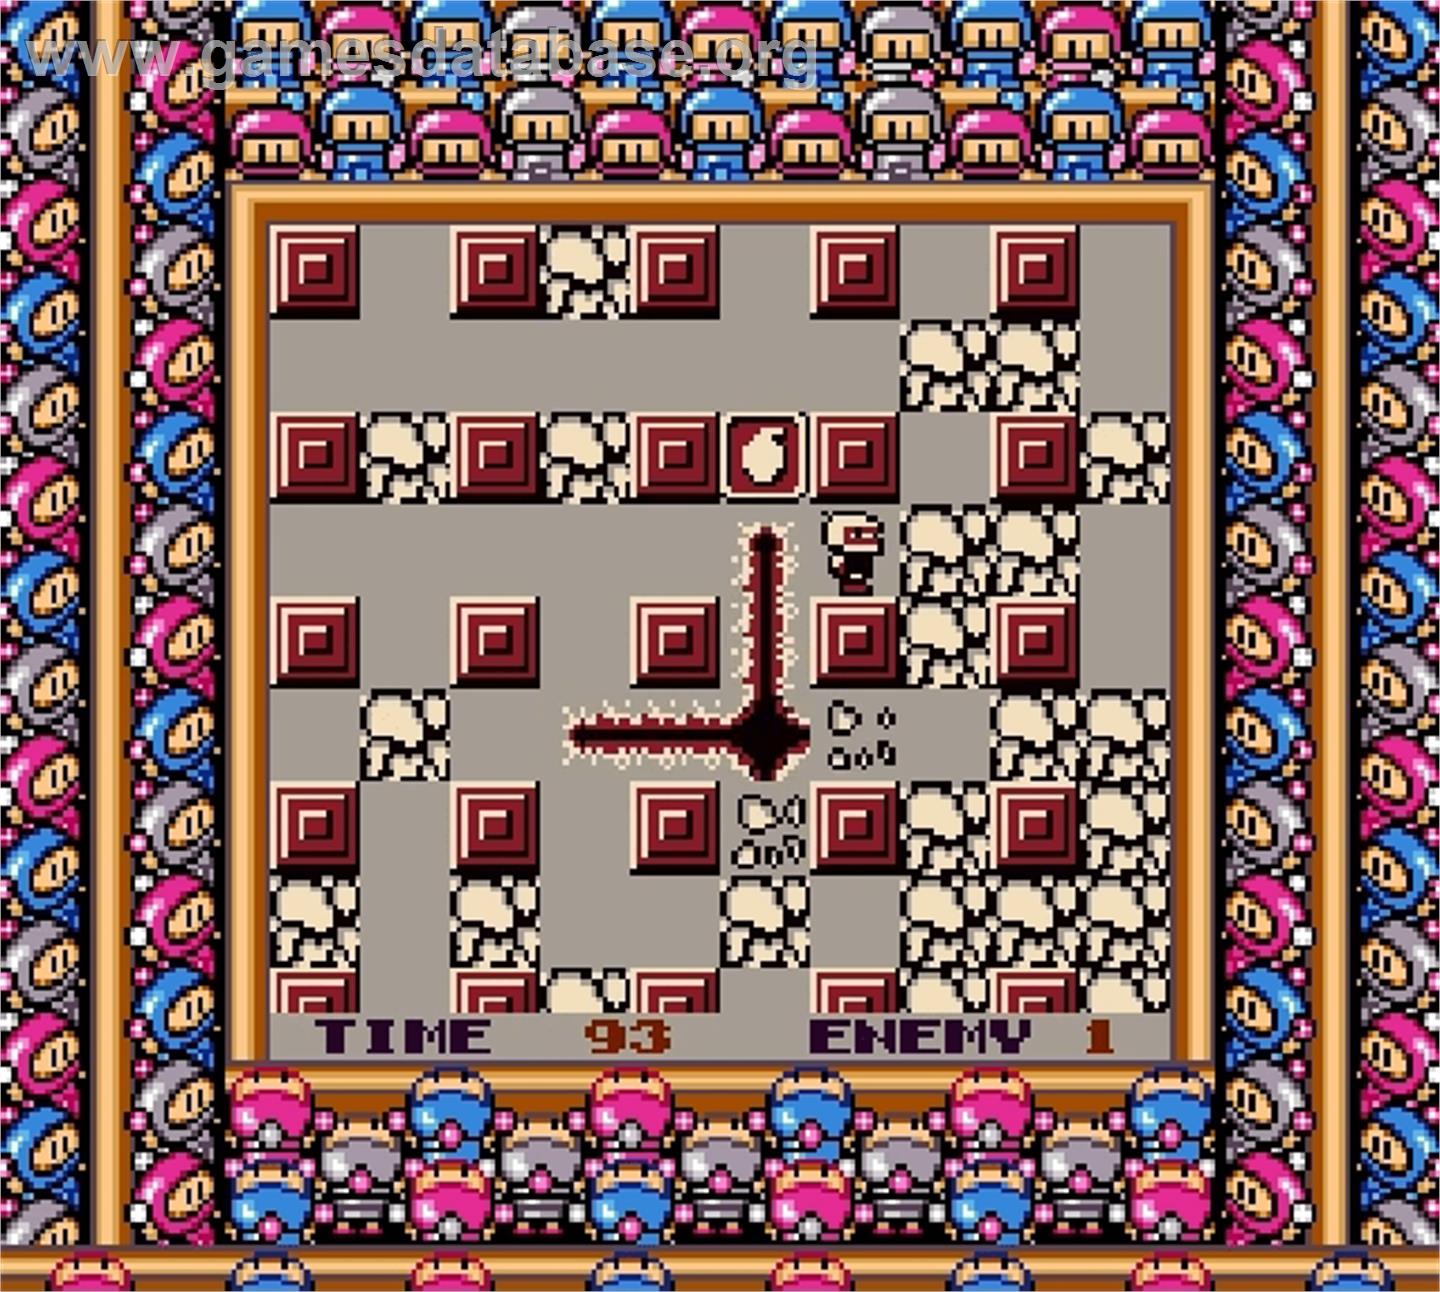 Bomberman GB - Nintendo Super Gameboy - Artwork - In Game